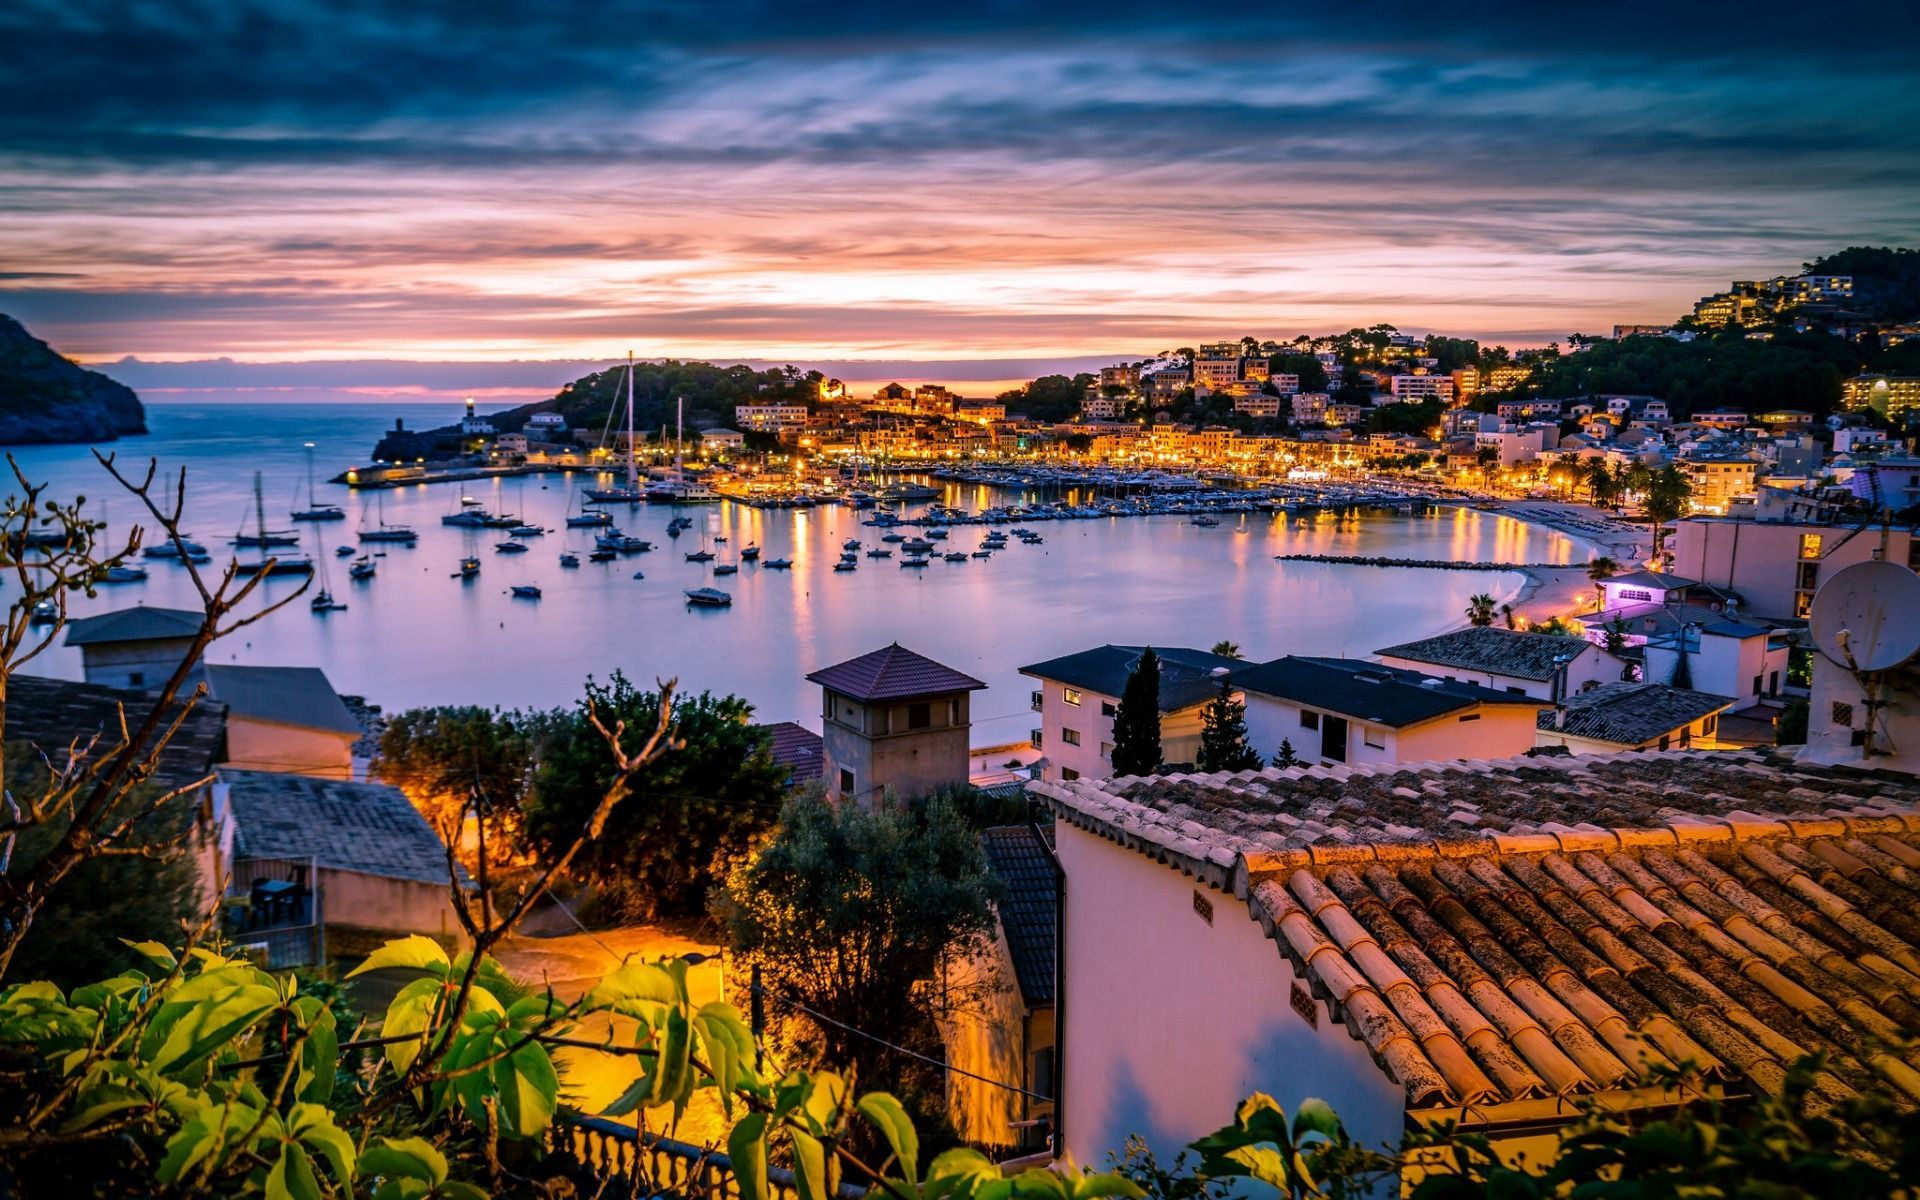 Port De Soller, Mallorca, Mediterranean Sea, yachts, sunset, evening, Spain. Mallorca, Soller, Wonders of the world